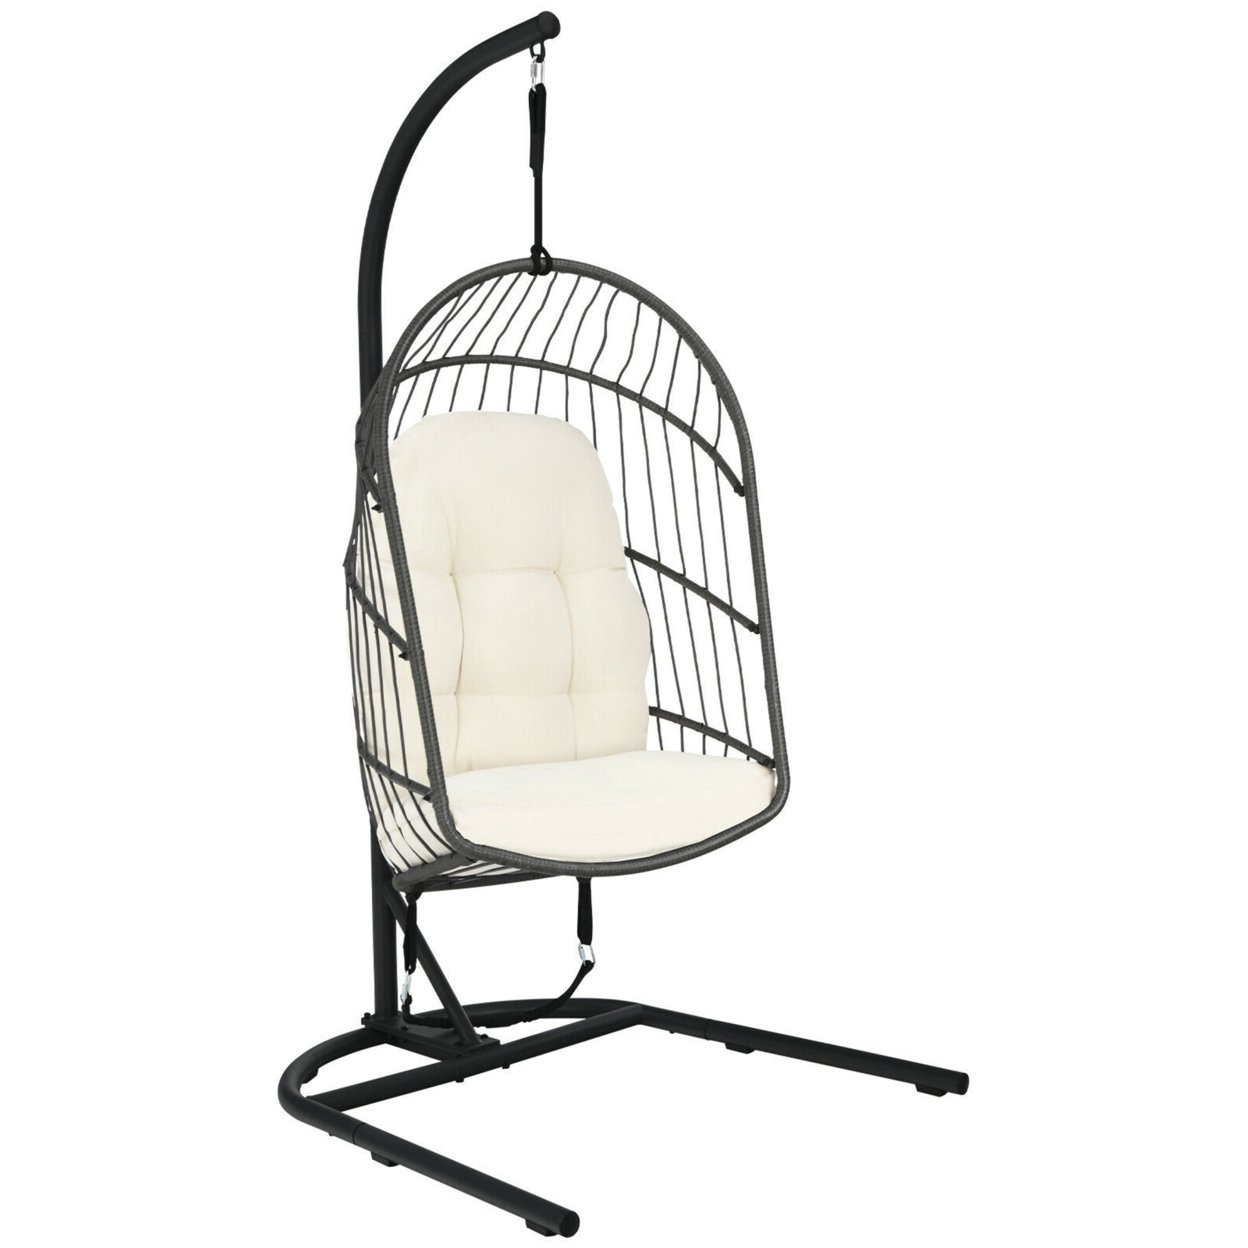 Hanging Hammock Egg Chair Patio Rattan Swing Chair W/ Stand & Cushions - Beige